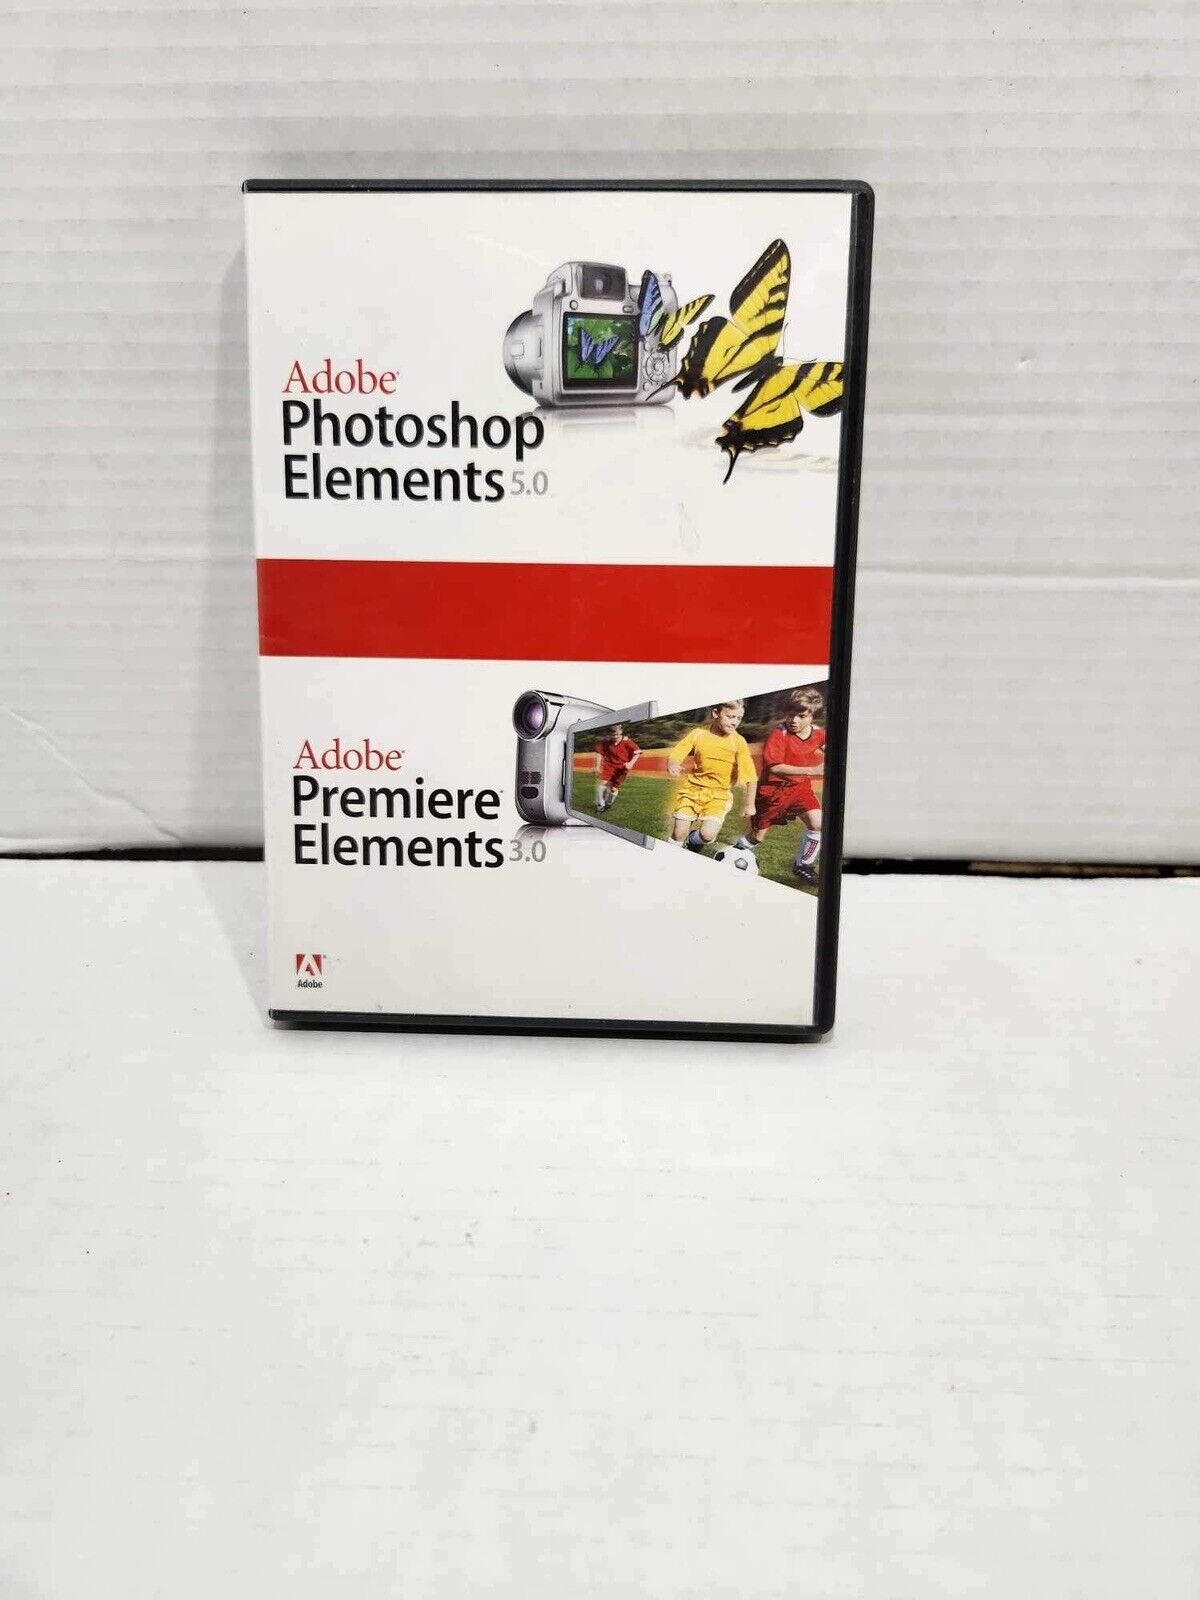 Adobe  Photoshop Elements 5.0 / Premiere Elements 3.0 (PC) W/Serial #’s